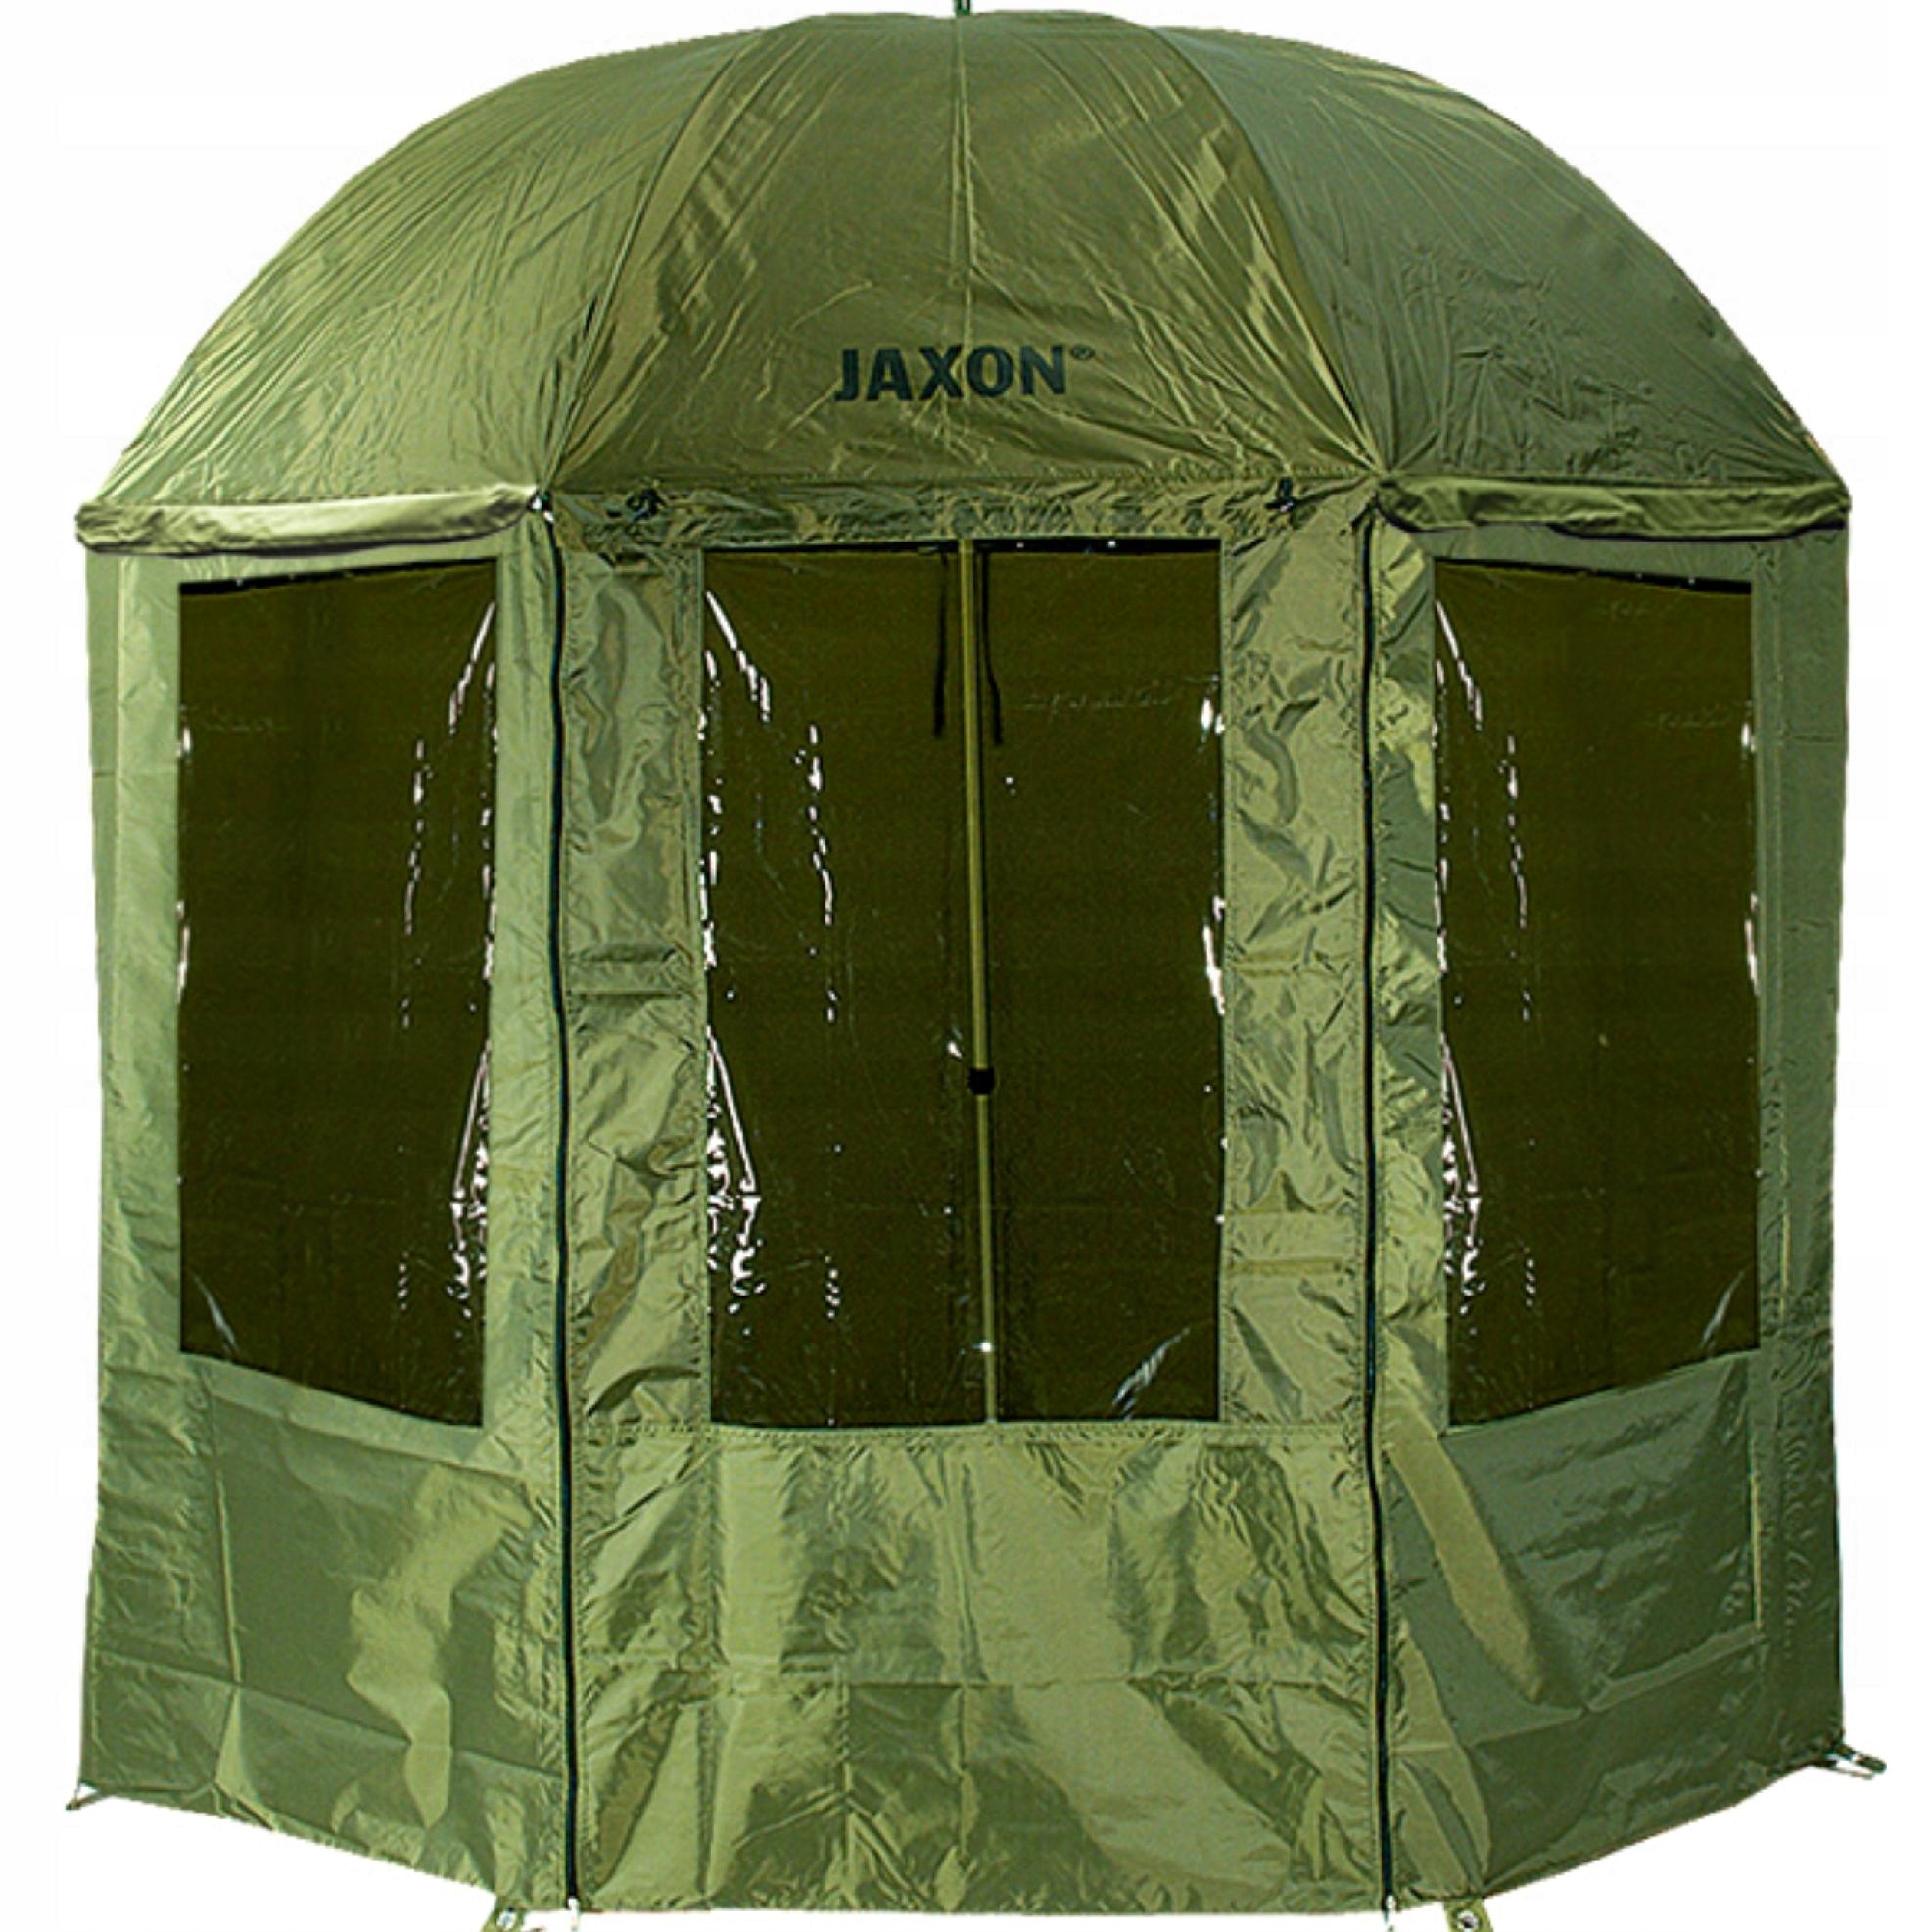 Палатки зонтичного типа. Зонт Jaxon AK-kzs040 250 см. Зонт-палатка Traper 250cm. Зонт-палатка Jaxon 250cm. Зонт Jaxon (артикул: AK-kzs040).